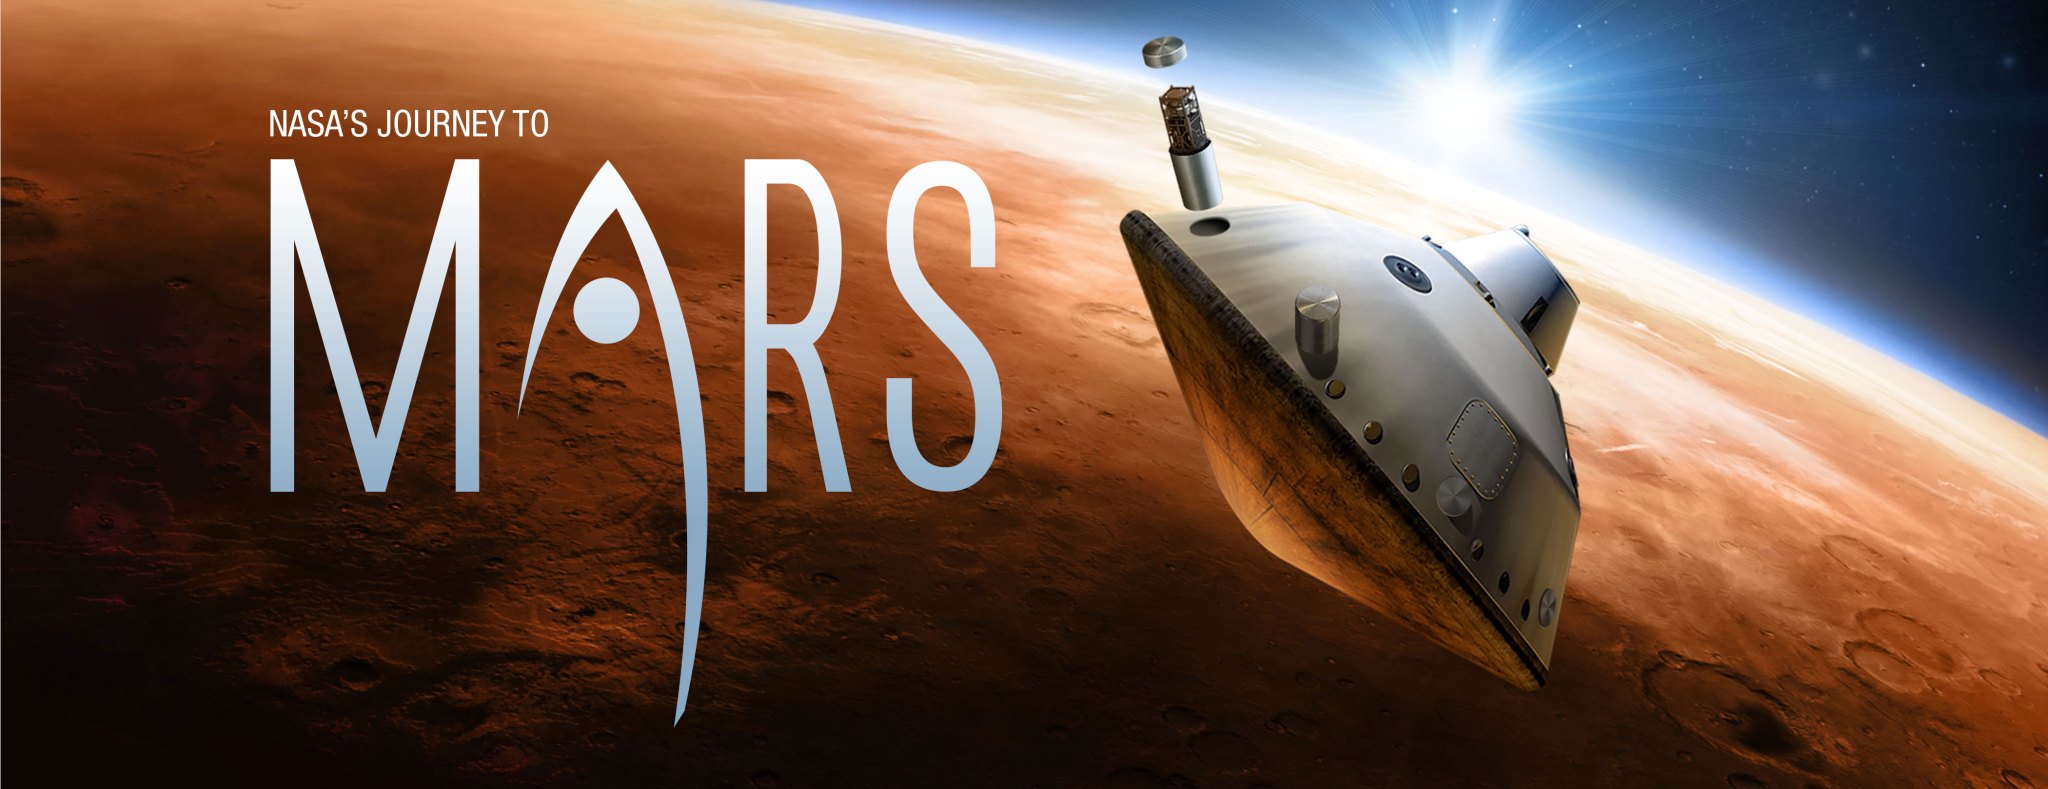 Journey of a Lifetime-Mars Header